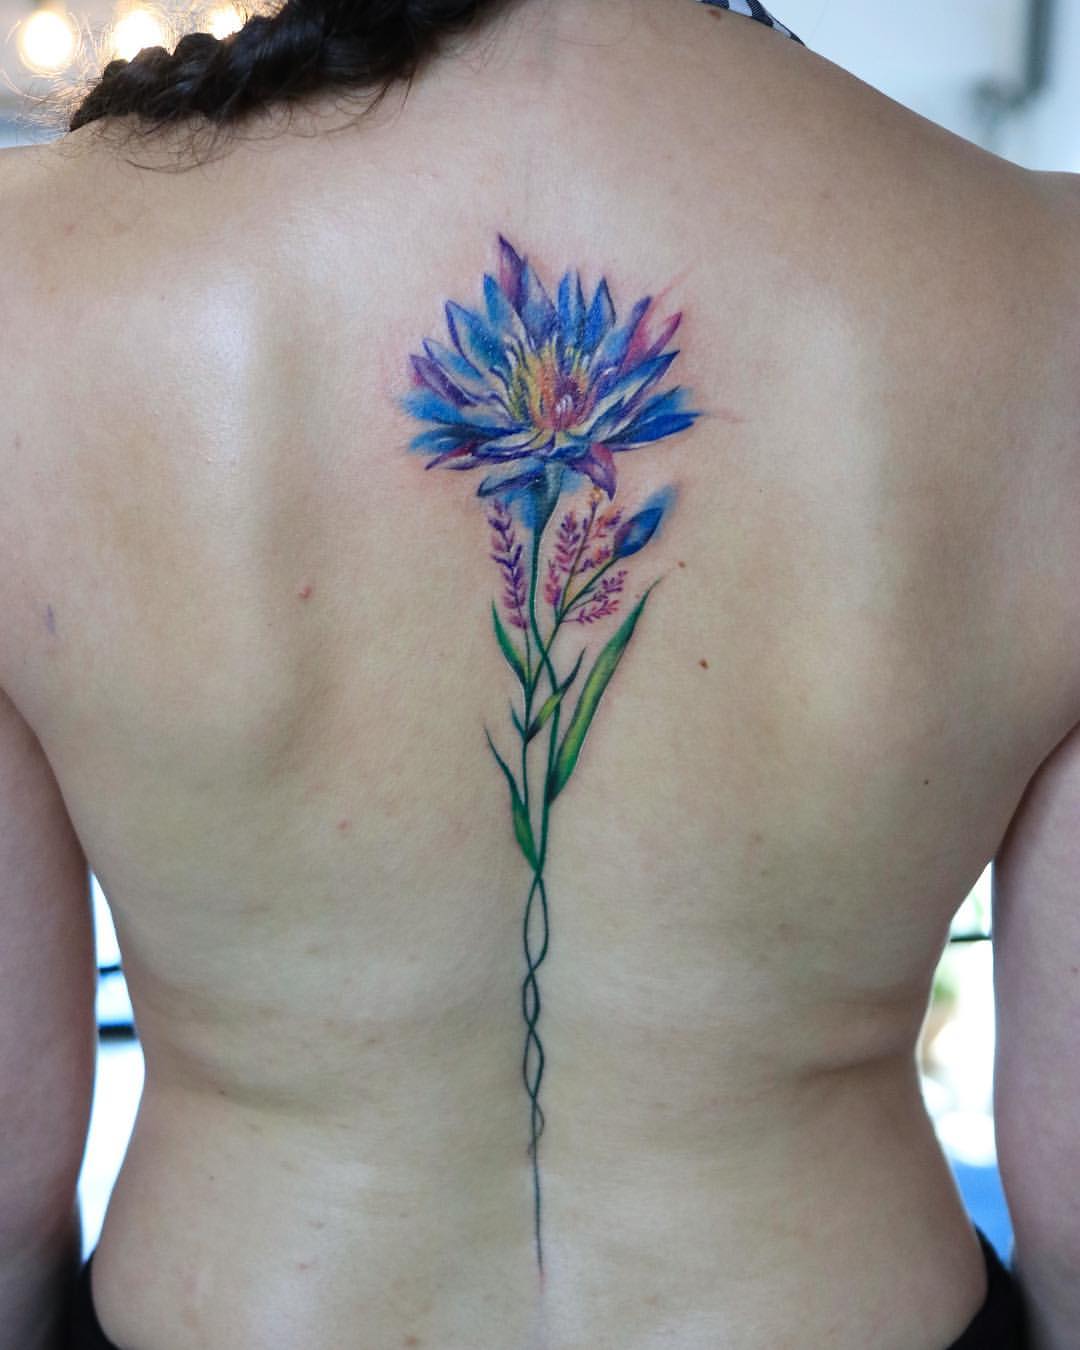 Spine Tattoos for Women 2